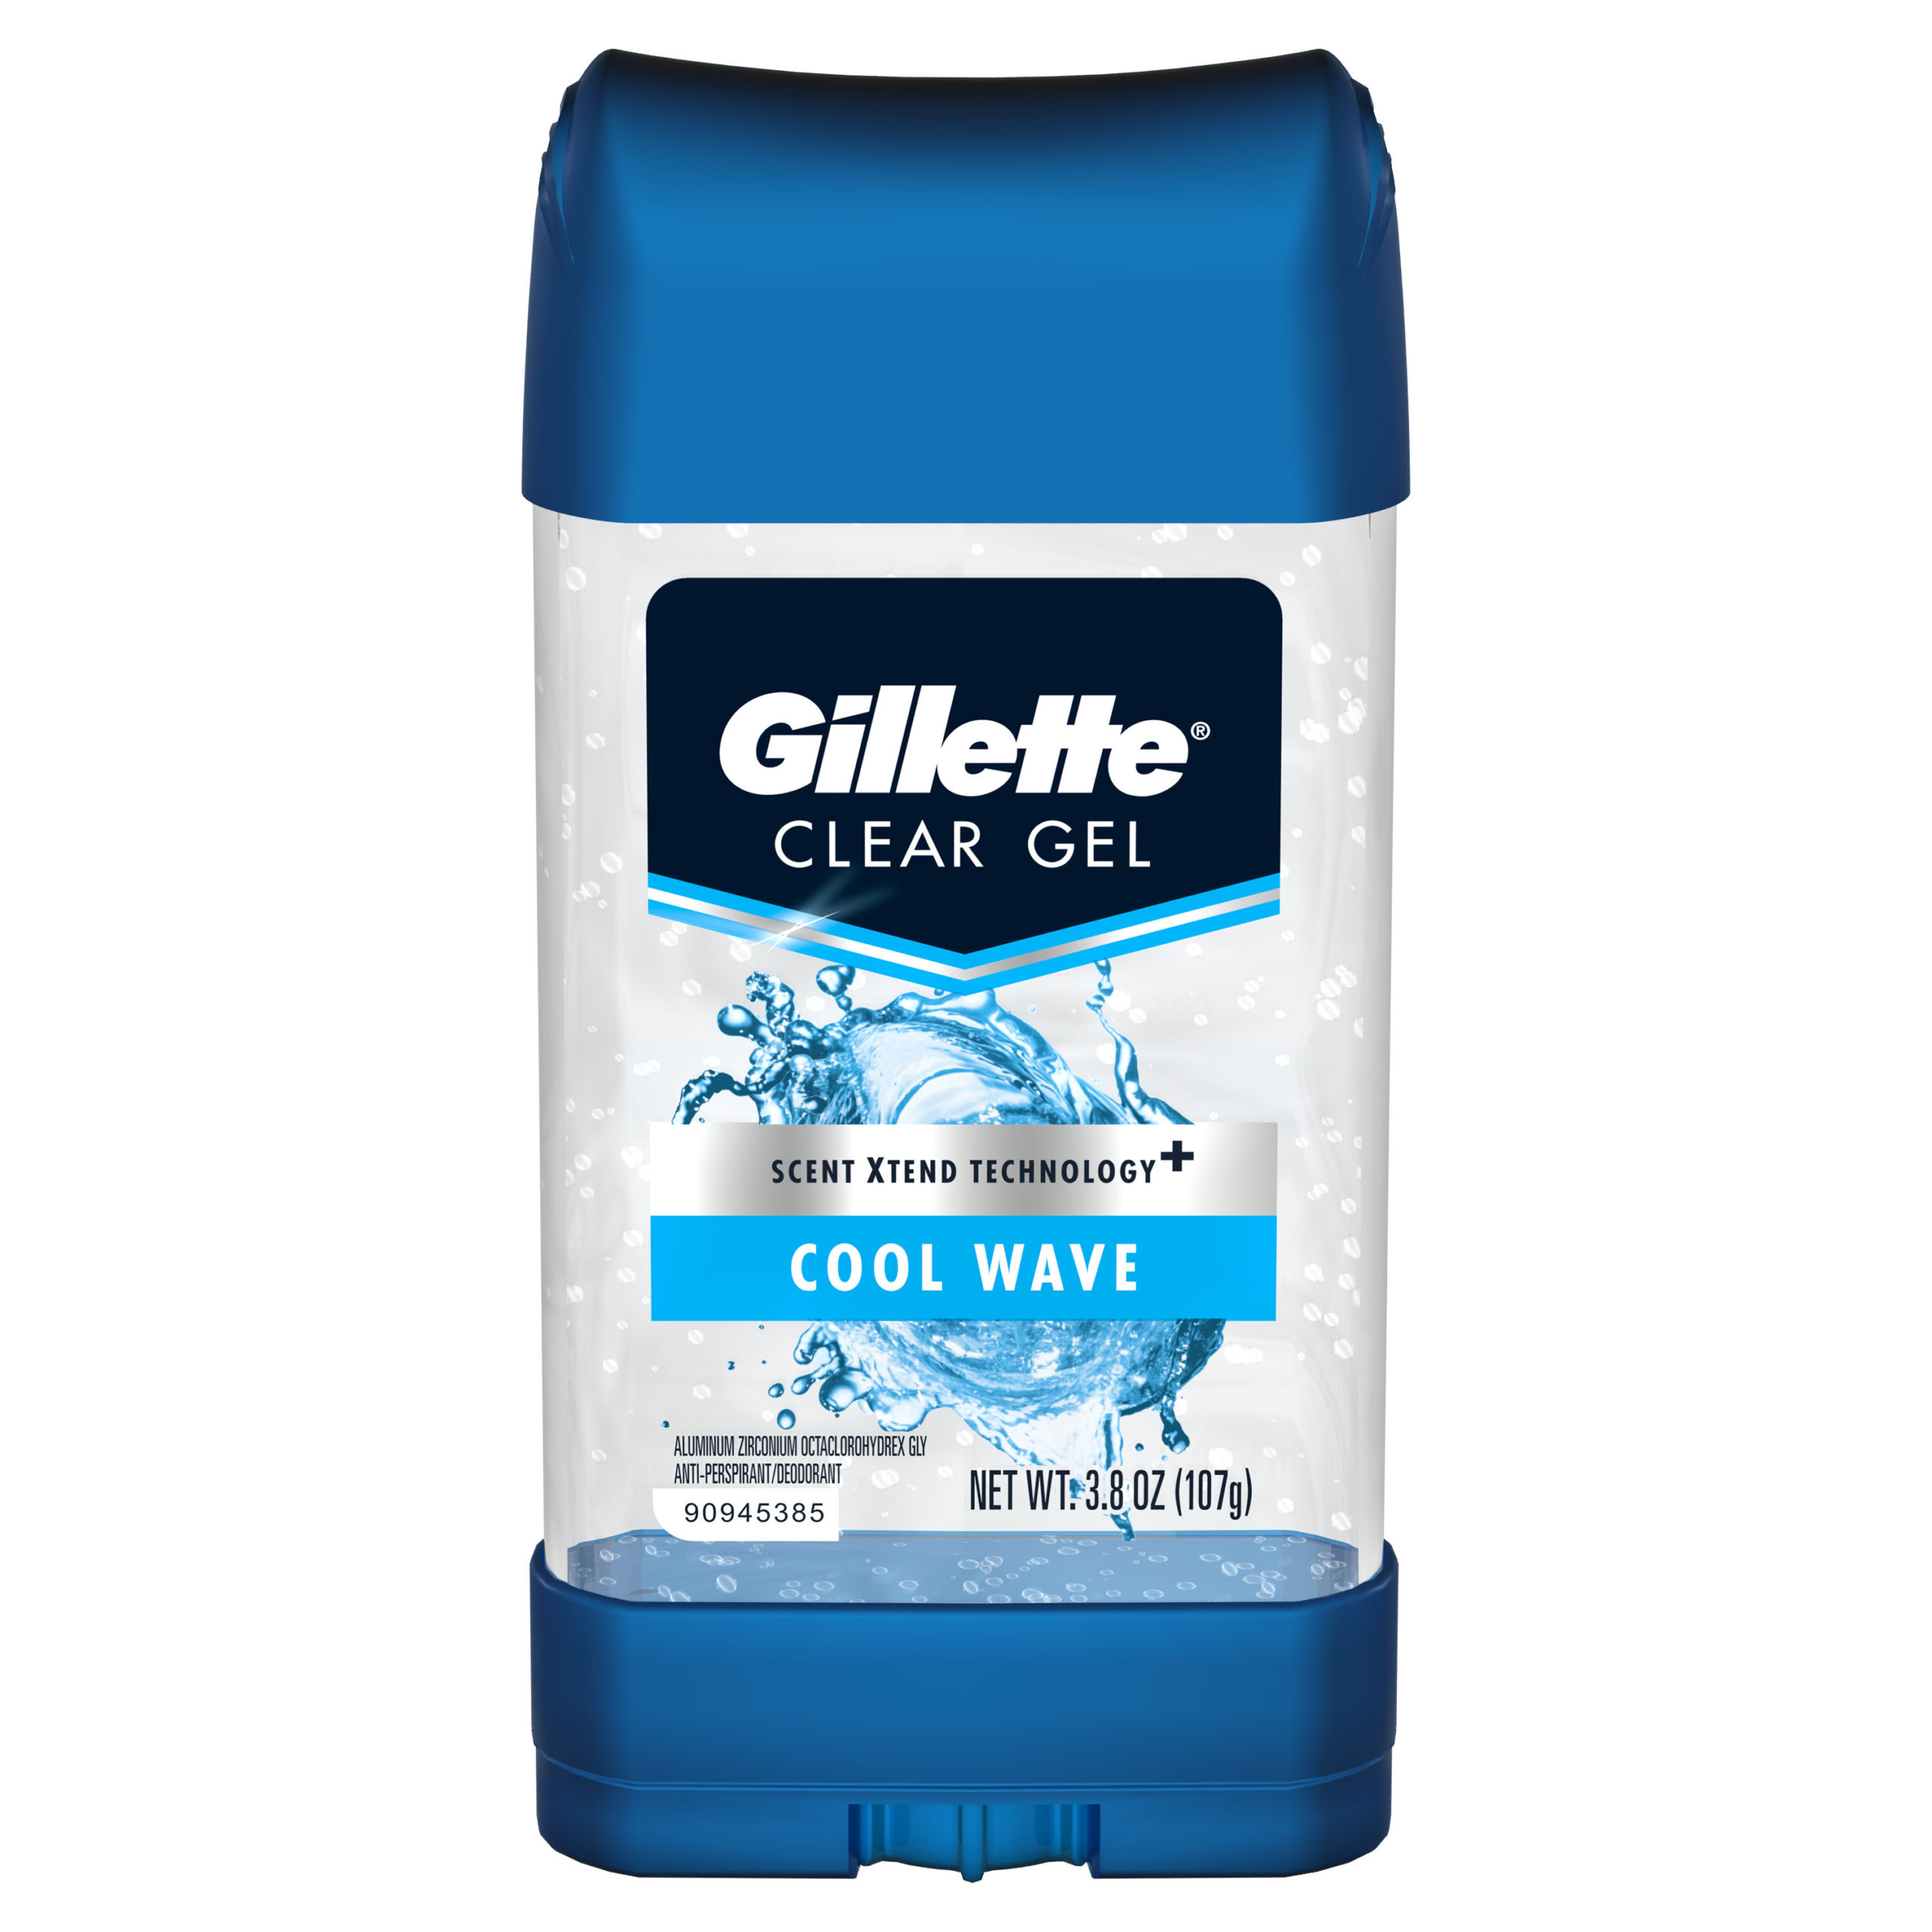 Gillette Clear Gel Cool Wave Deodorant 2.85 oz